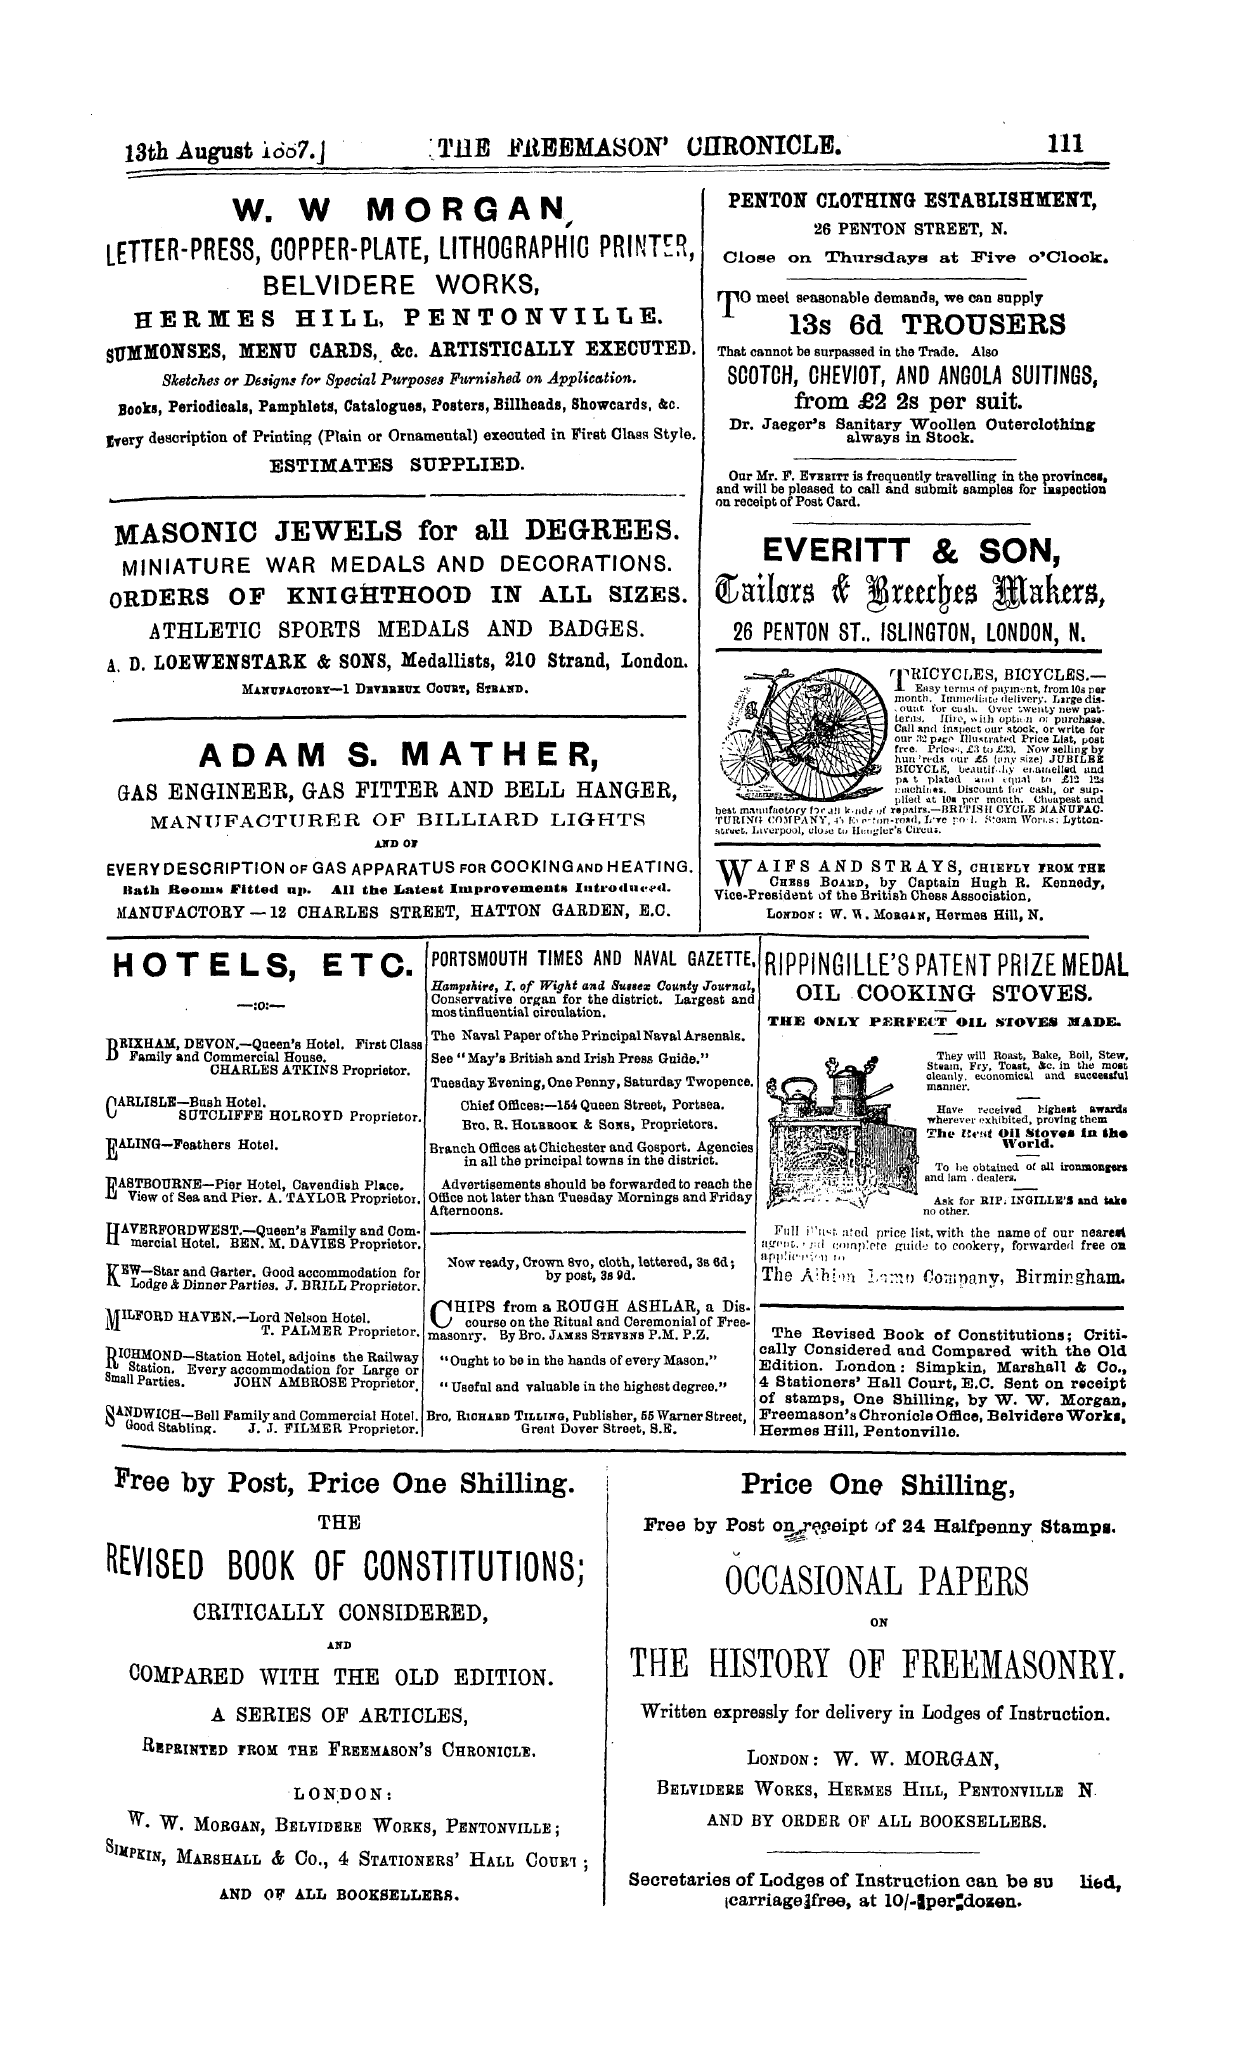 The Freemason's Chronicle: 1887-08-13 - Ad01500